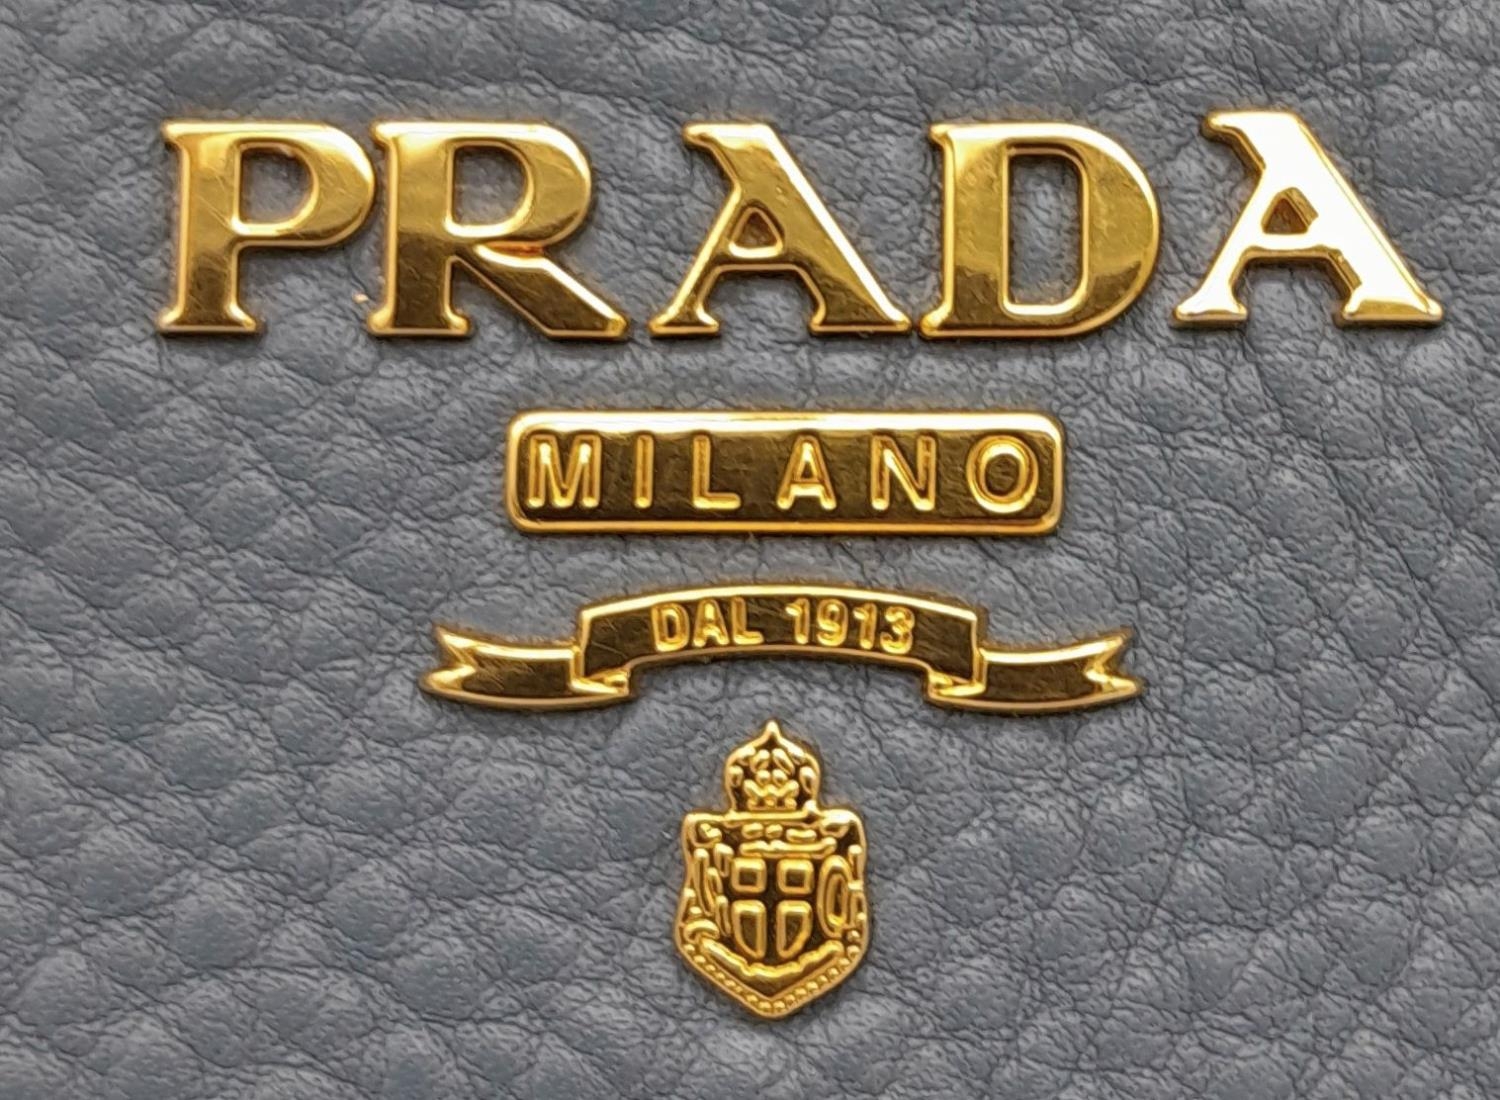 A Prada Marine Blue Vitello Daino Shoulder Bag. Leather exterior with gold-toned hardware, - Image 5 of 8